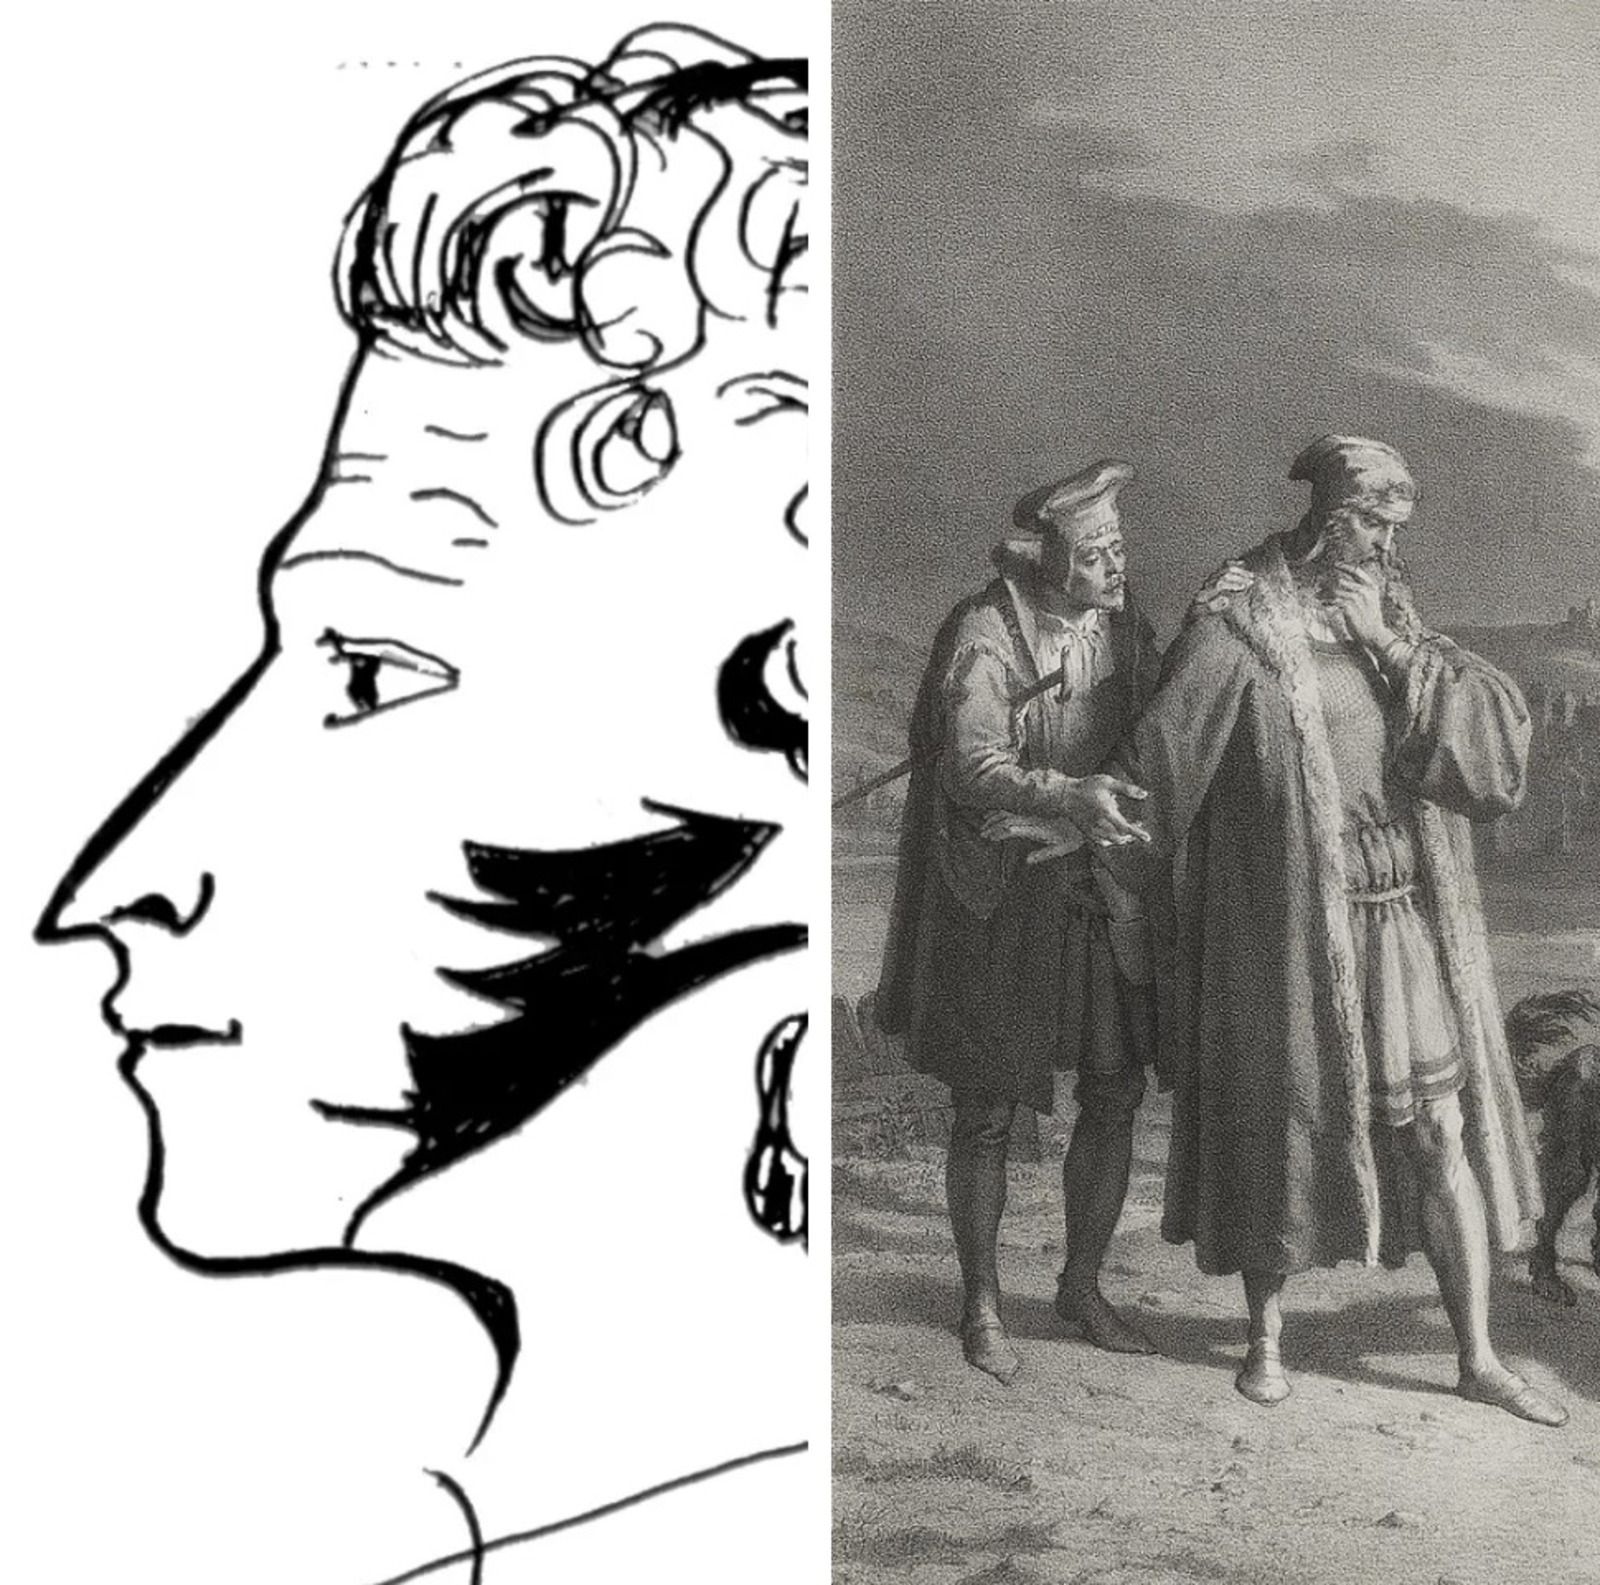 Пушкин (автопортрет) и Ф. Г. Шлик.«Фауст и Вагнер на прогулке»